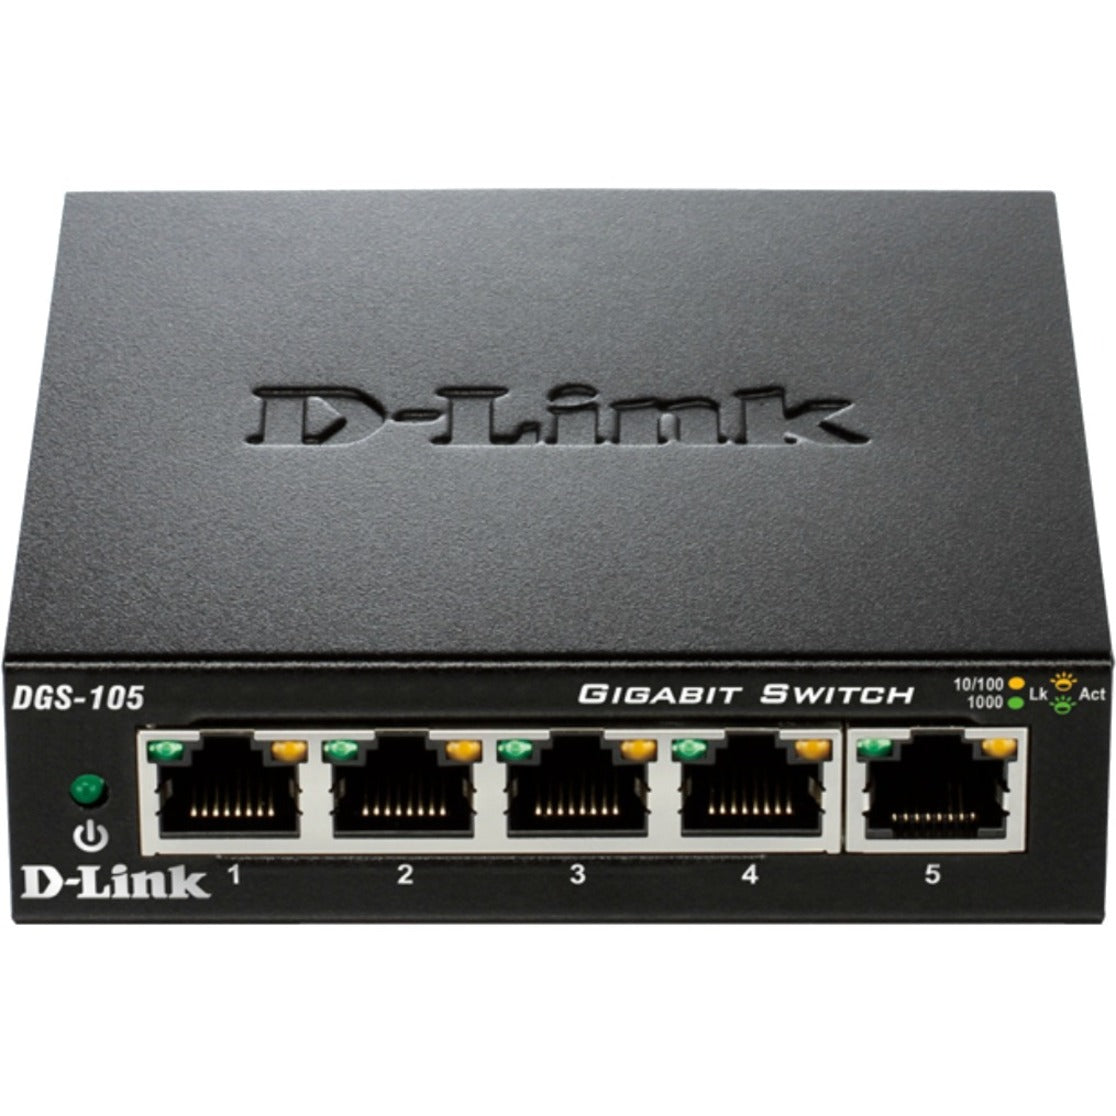 D-Link DGS-105GL DGS-105 Ethernet Switch, 5-Port Gigabit Ethernet Network, Energy Star, Philippines